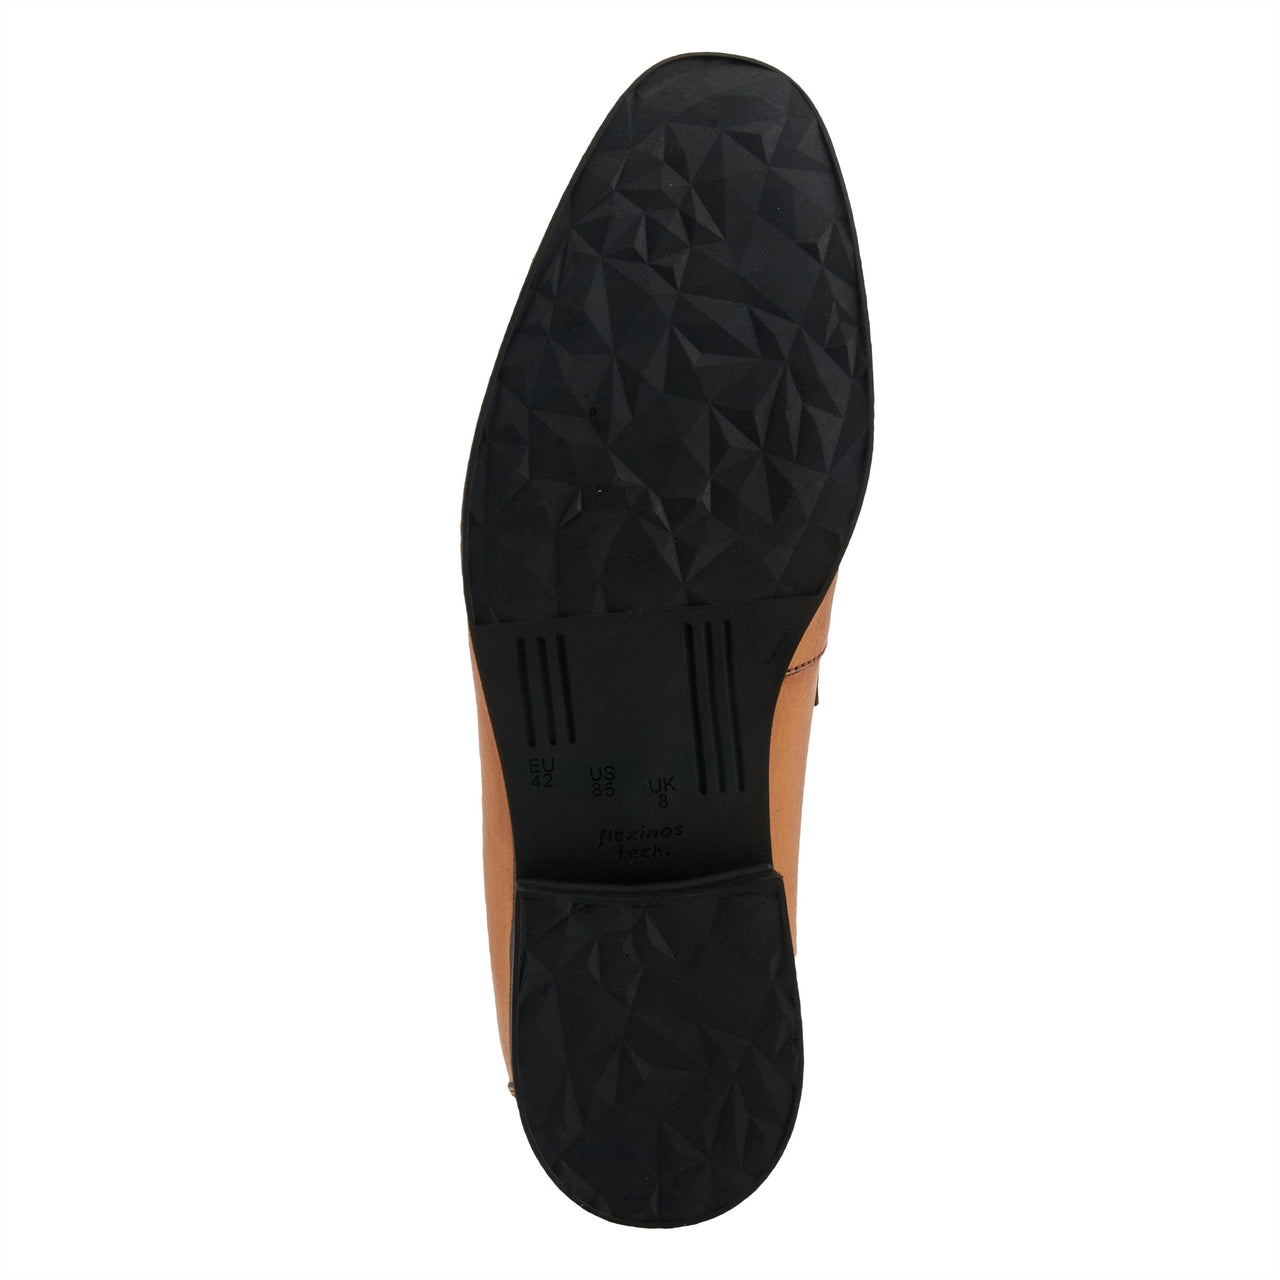 
Spring Step Men Paul Shoes versatile design for work or casual wear